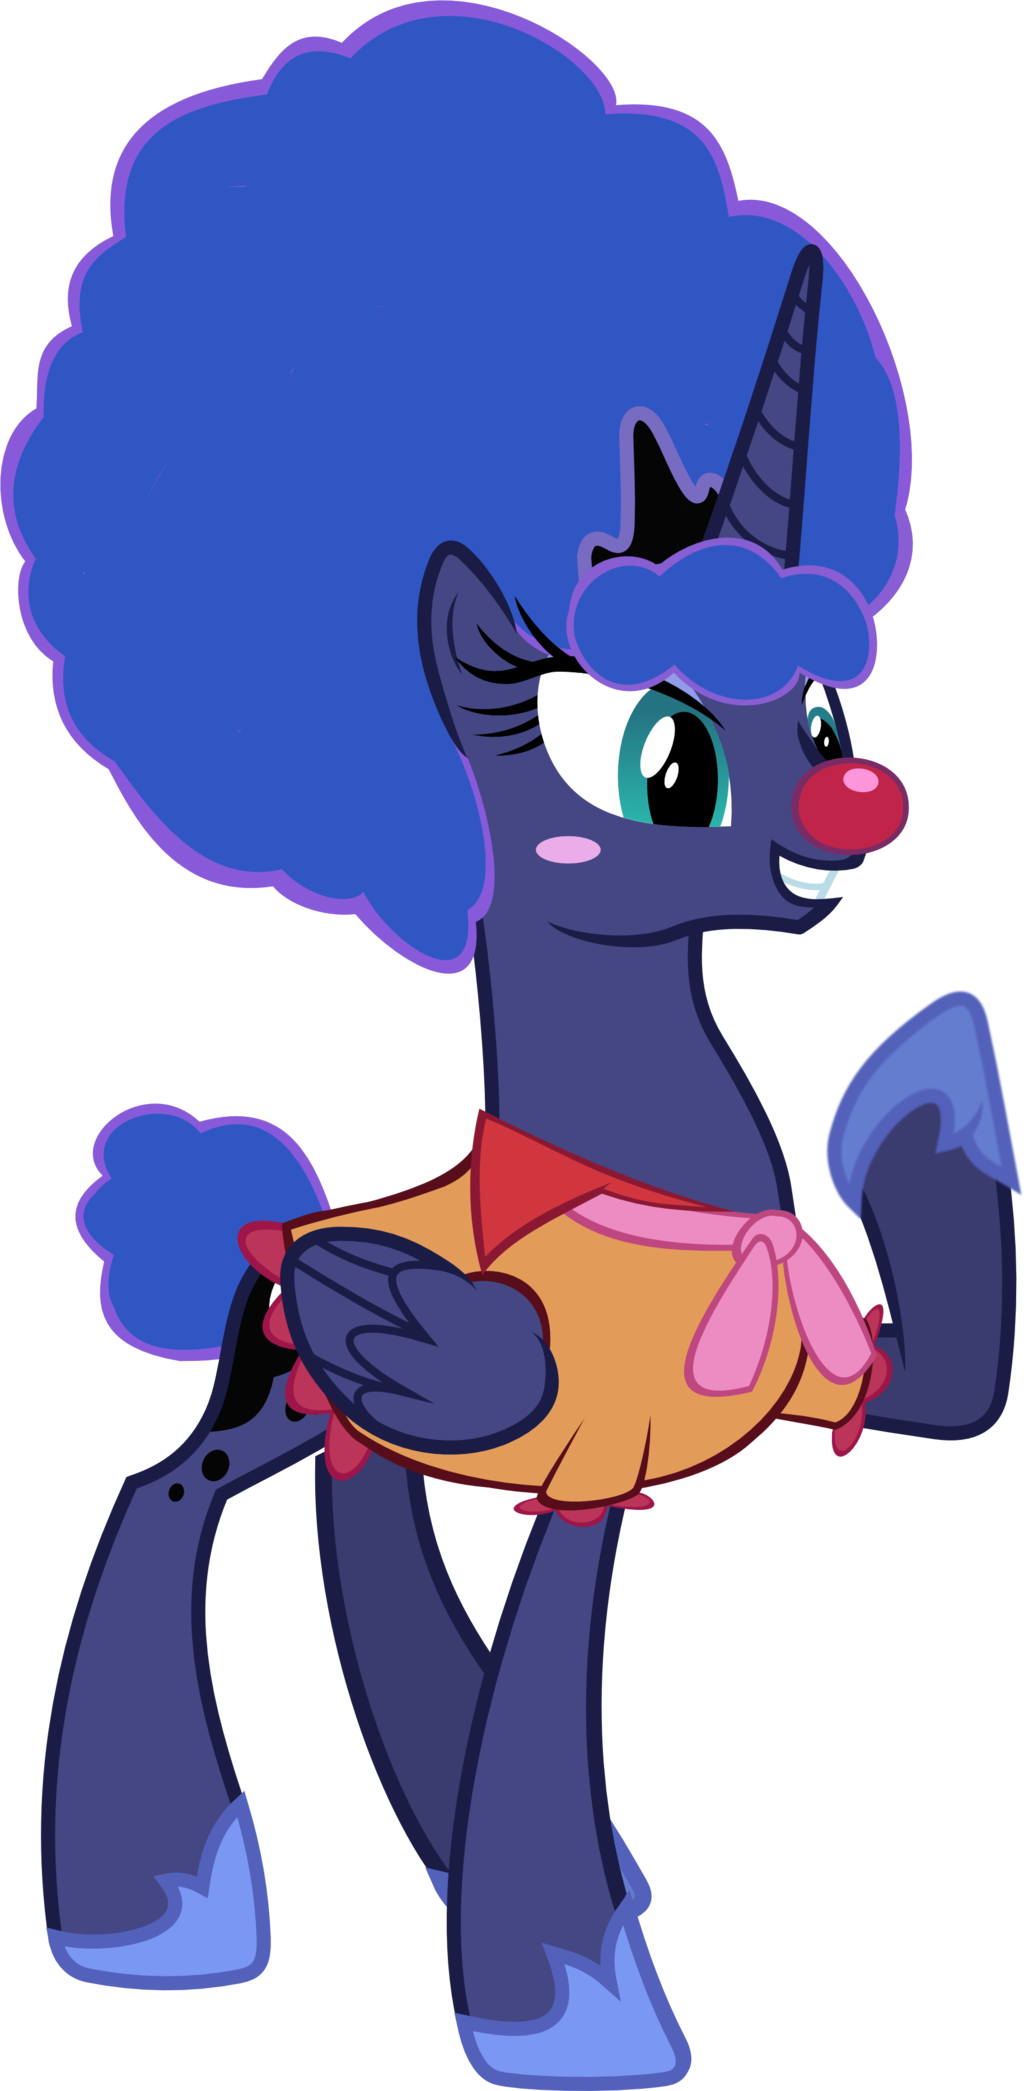 Clown Luna By Megarainbowdash2000 Clown Luna By Megarainbowdash2000 - Princess Celestia And Luna The Clown (1024x2091)